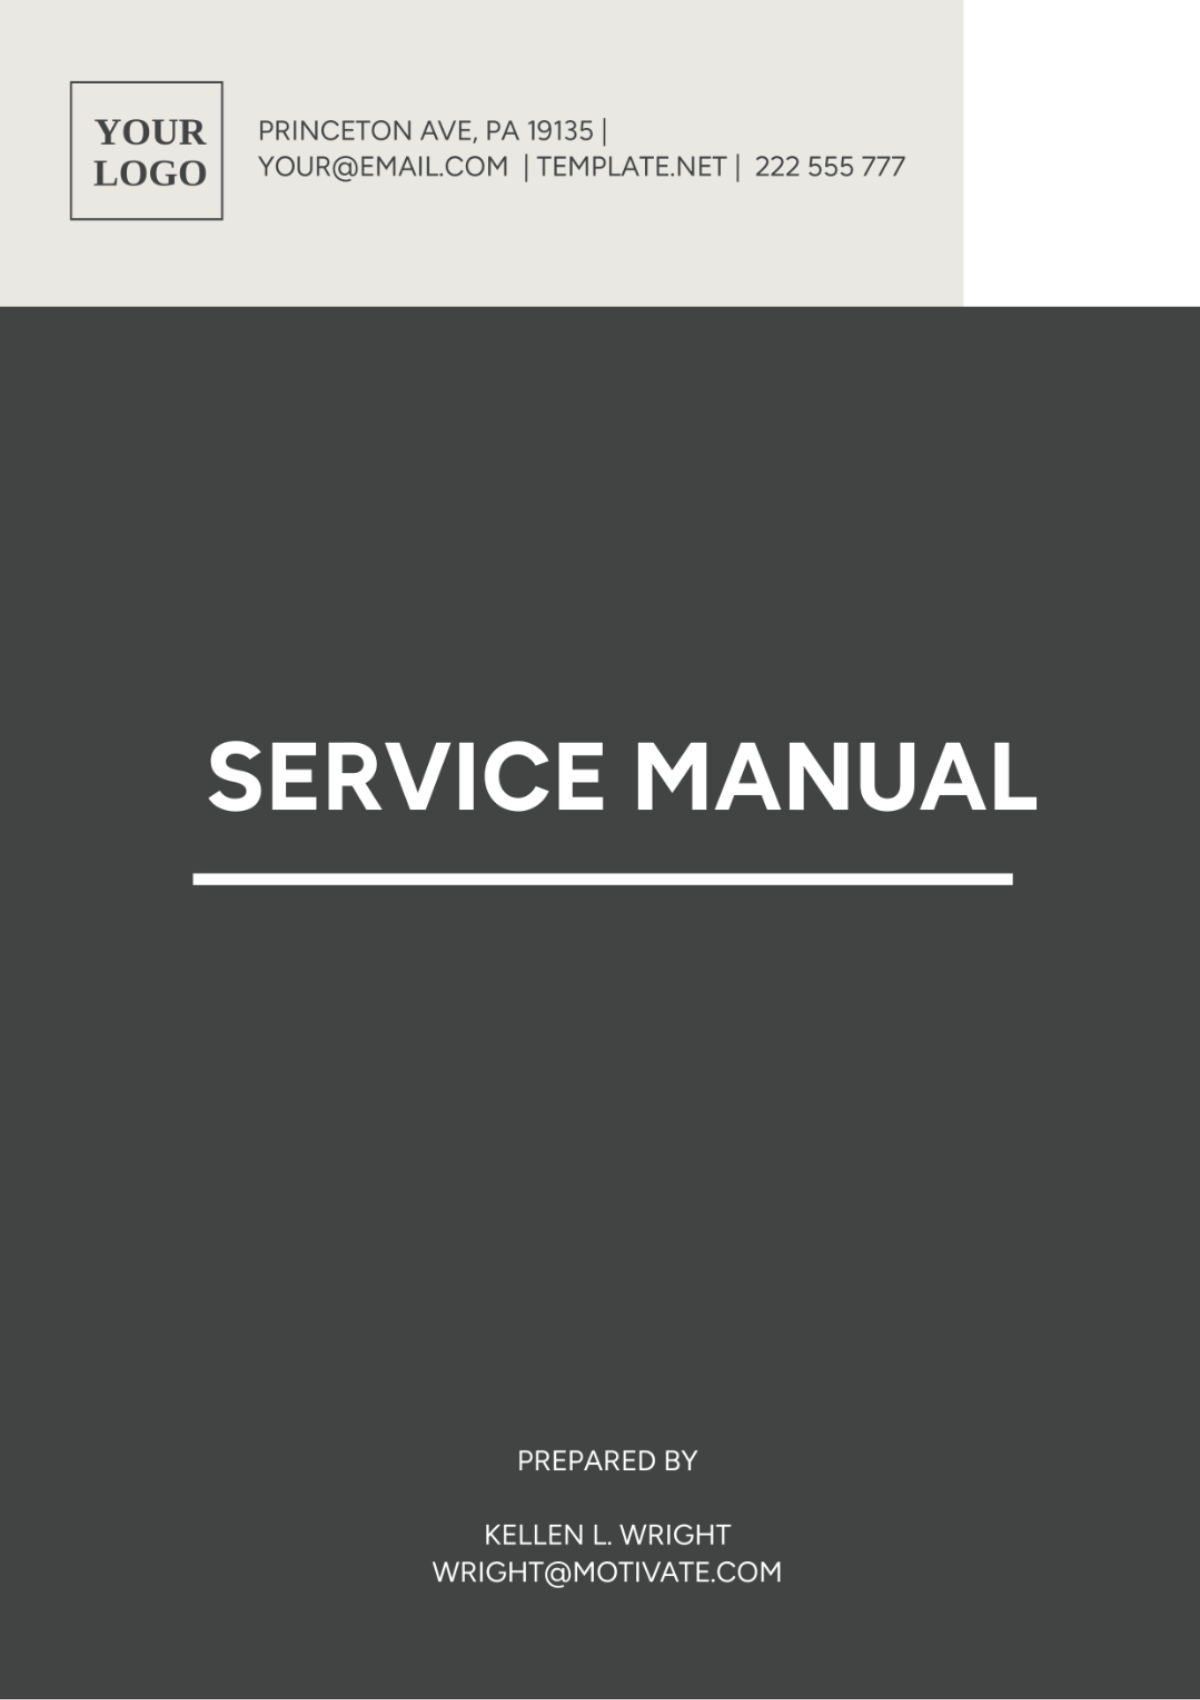 Service Manual Template